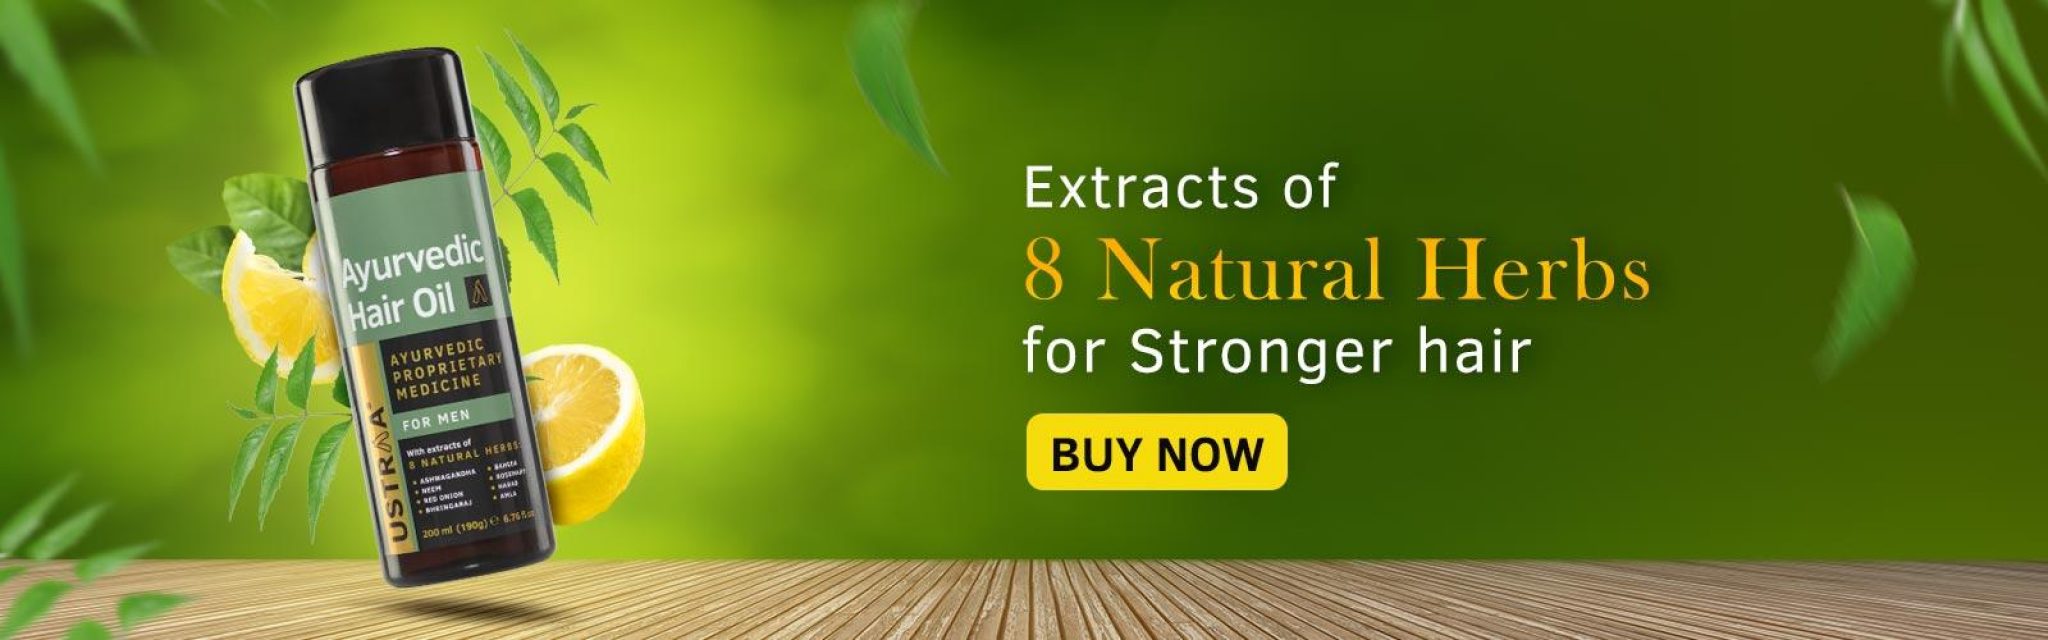 ustraa-ayurvedic-oil-8natural-herbs